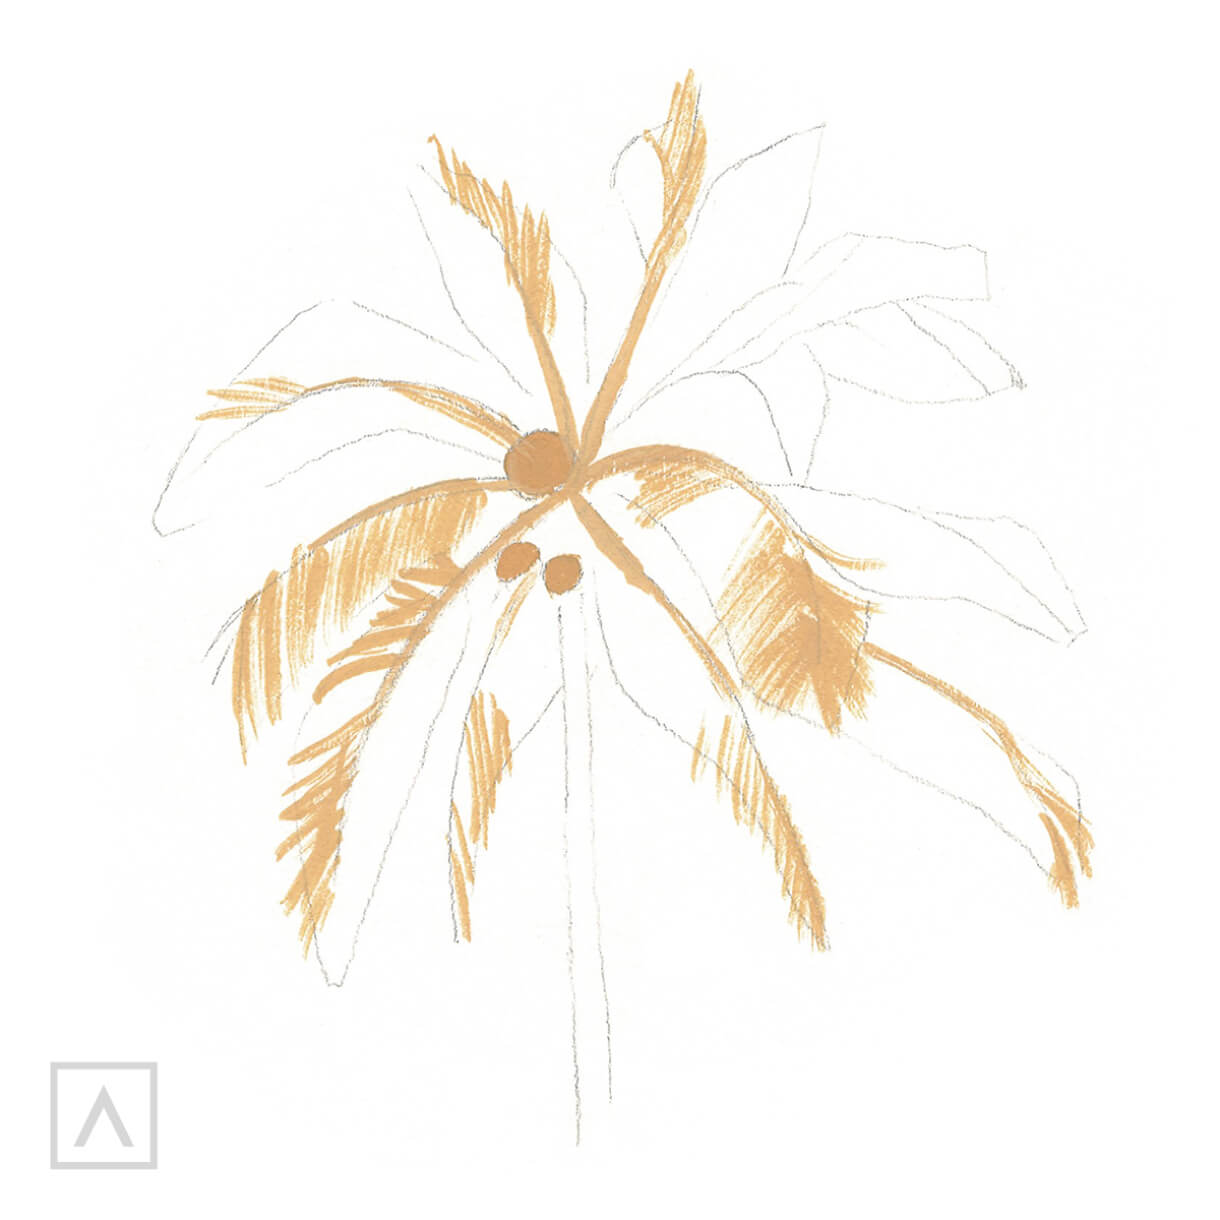 Palm drawing